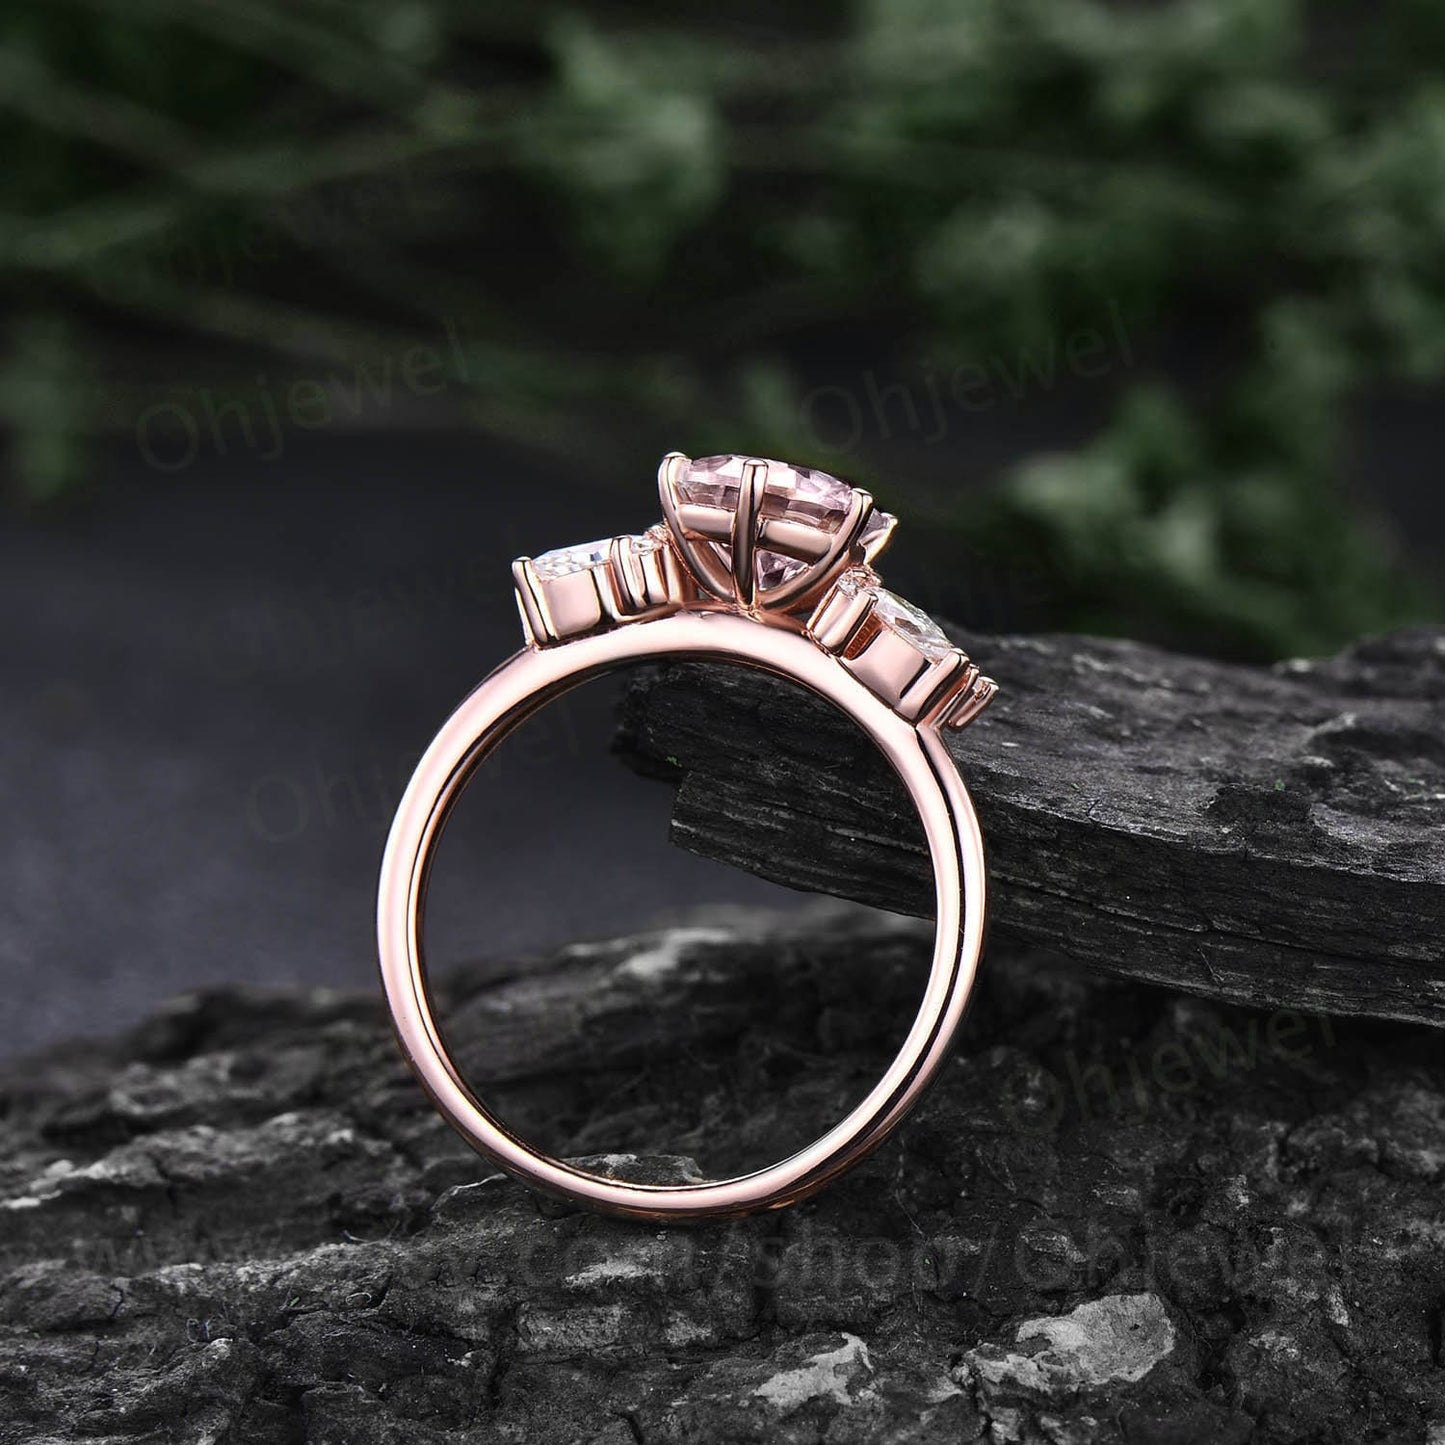 Pink morganite ring gold vintage morganite engagement ring unique cluster engagement ring diamond ring jewelry wedding promise ring women